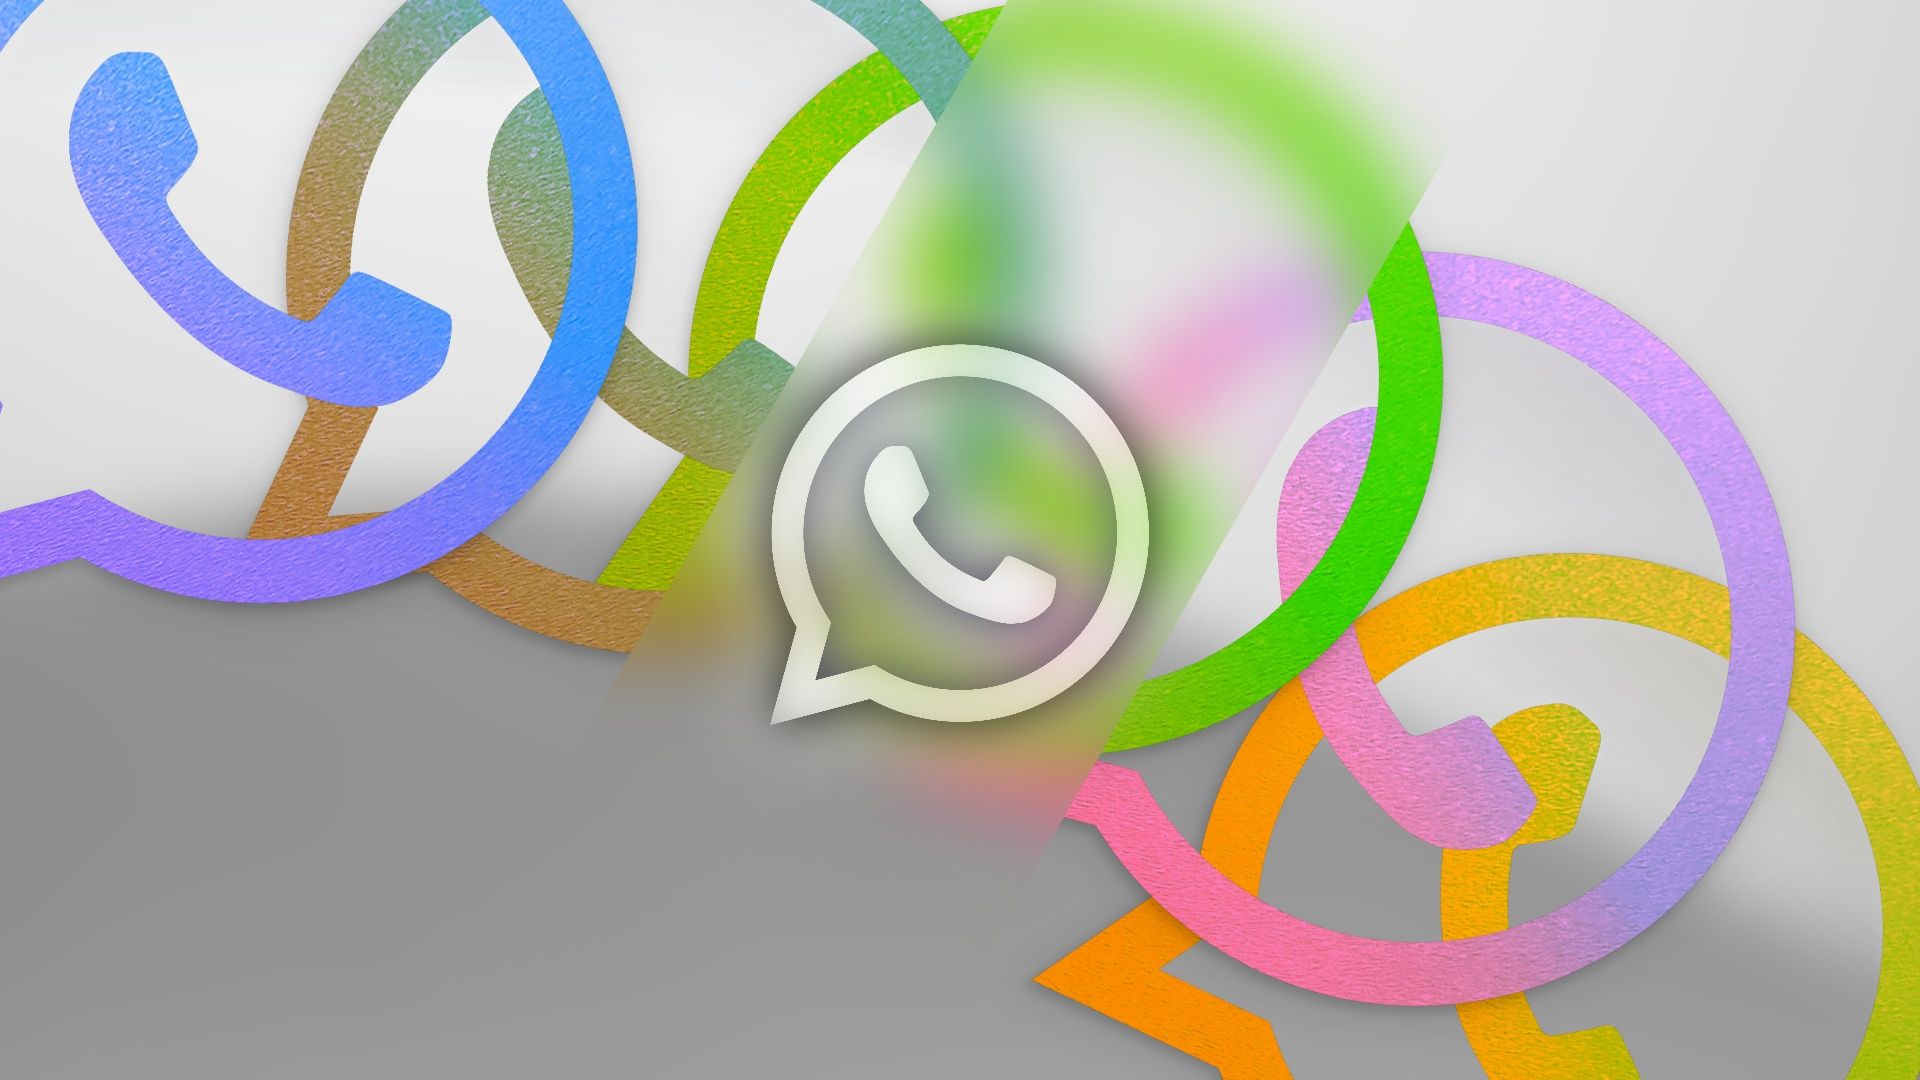 Several WhatsApp logos in various colors